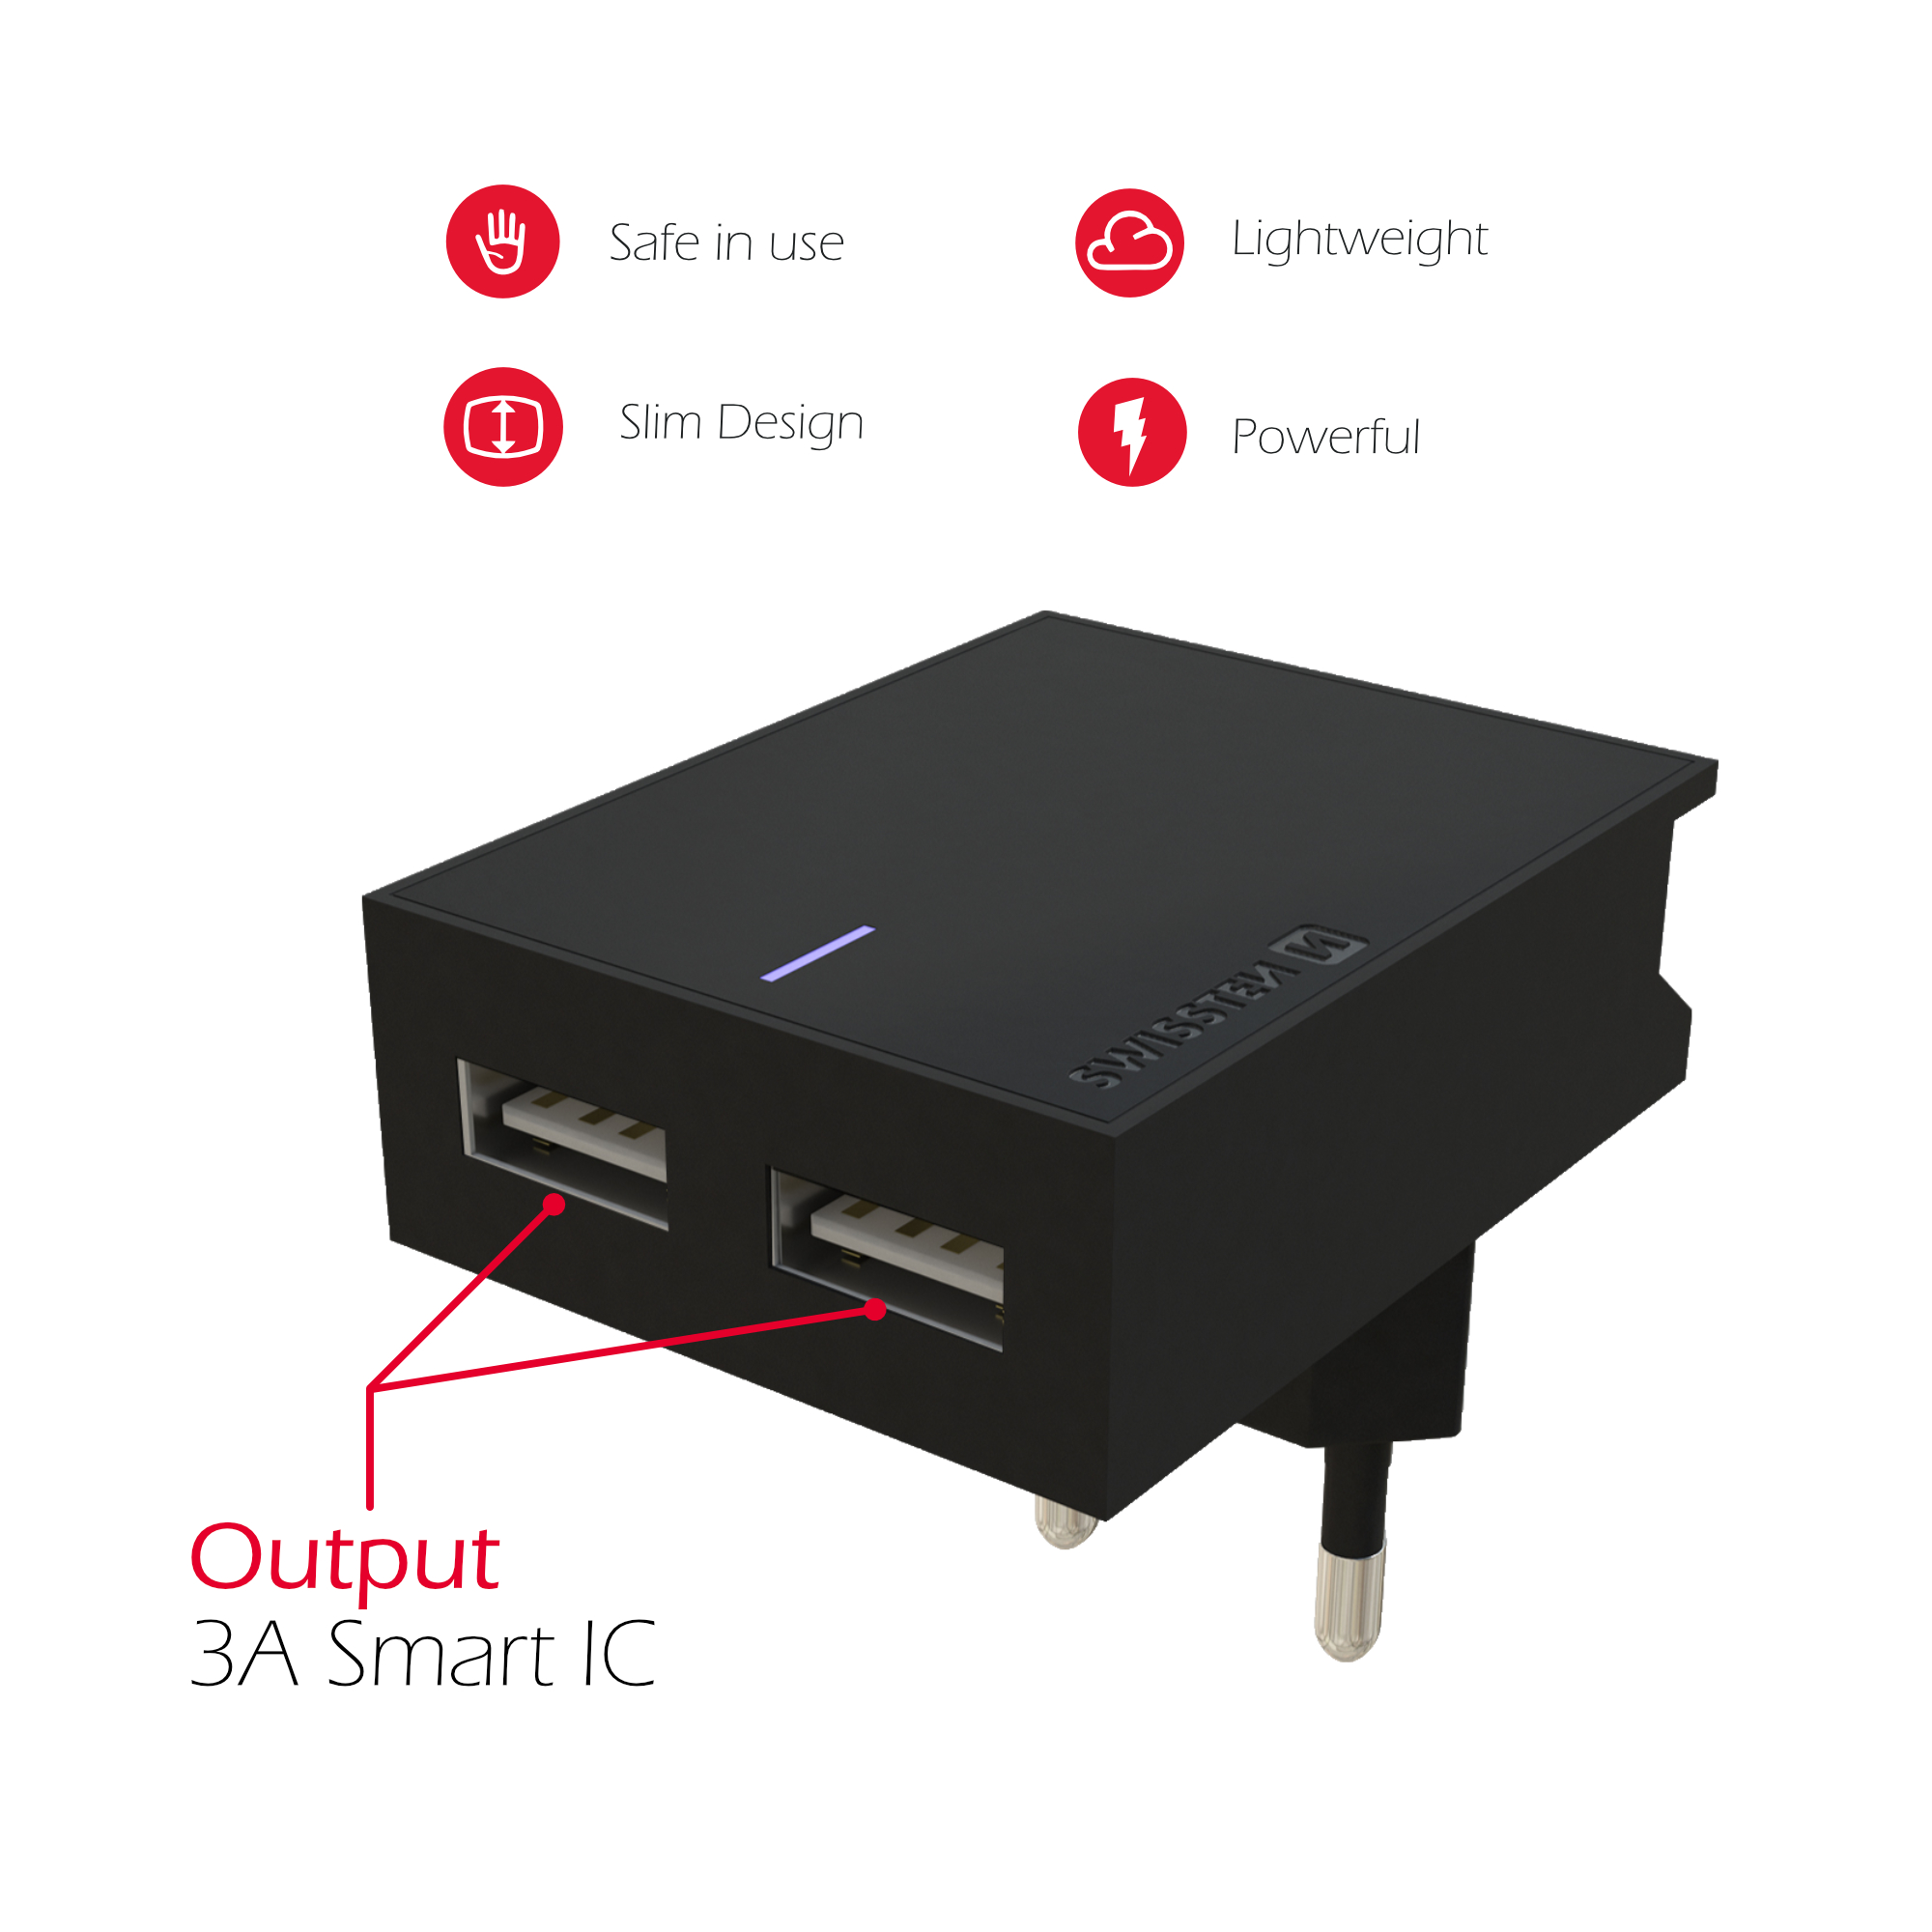 Swissten Travel Adapter Smart IC 2x USB 3A Power + Cablu de date USB / Type C 1.2 M Negru thumb